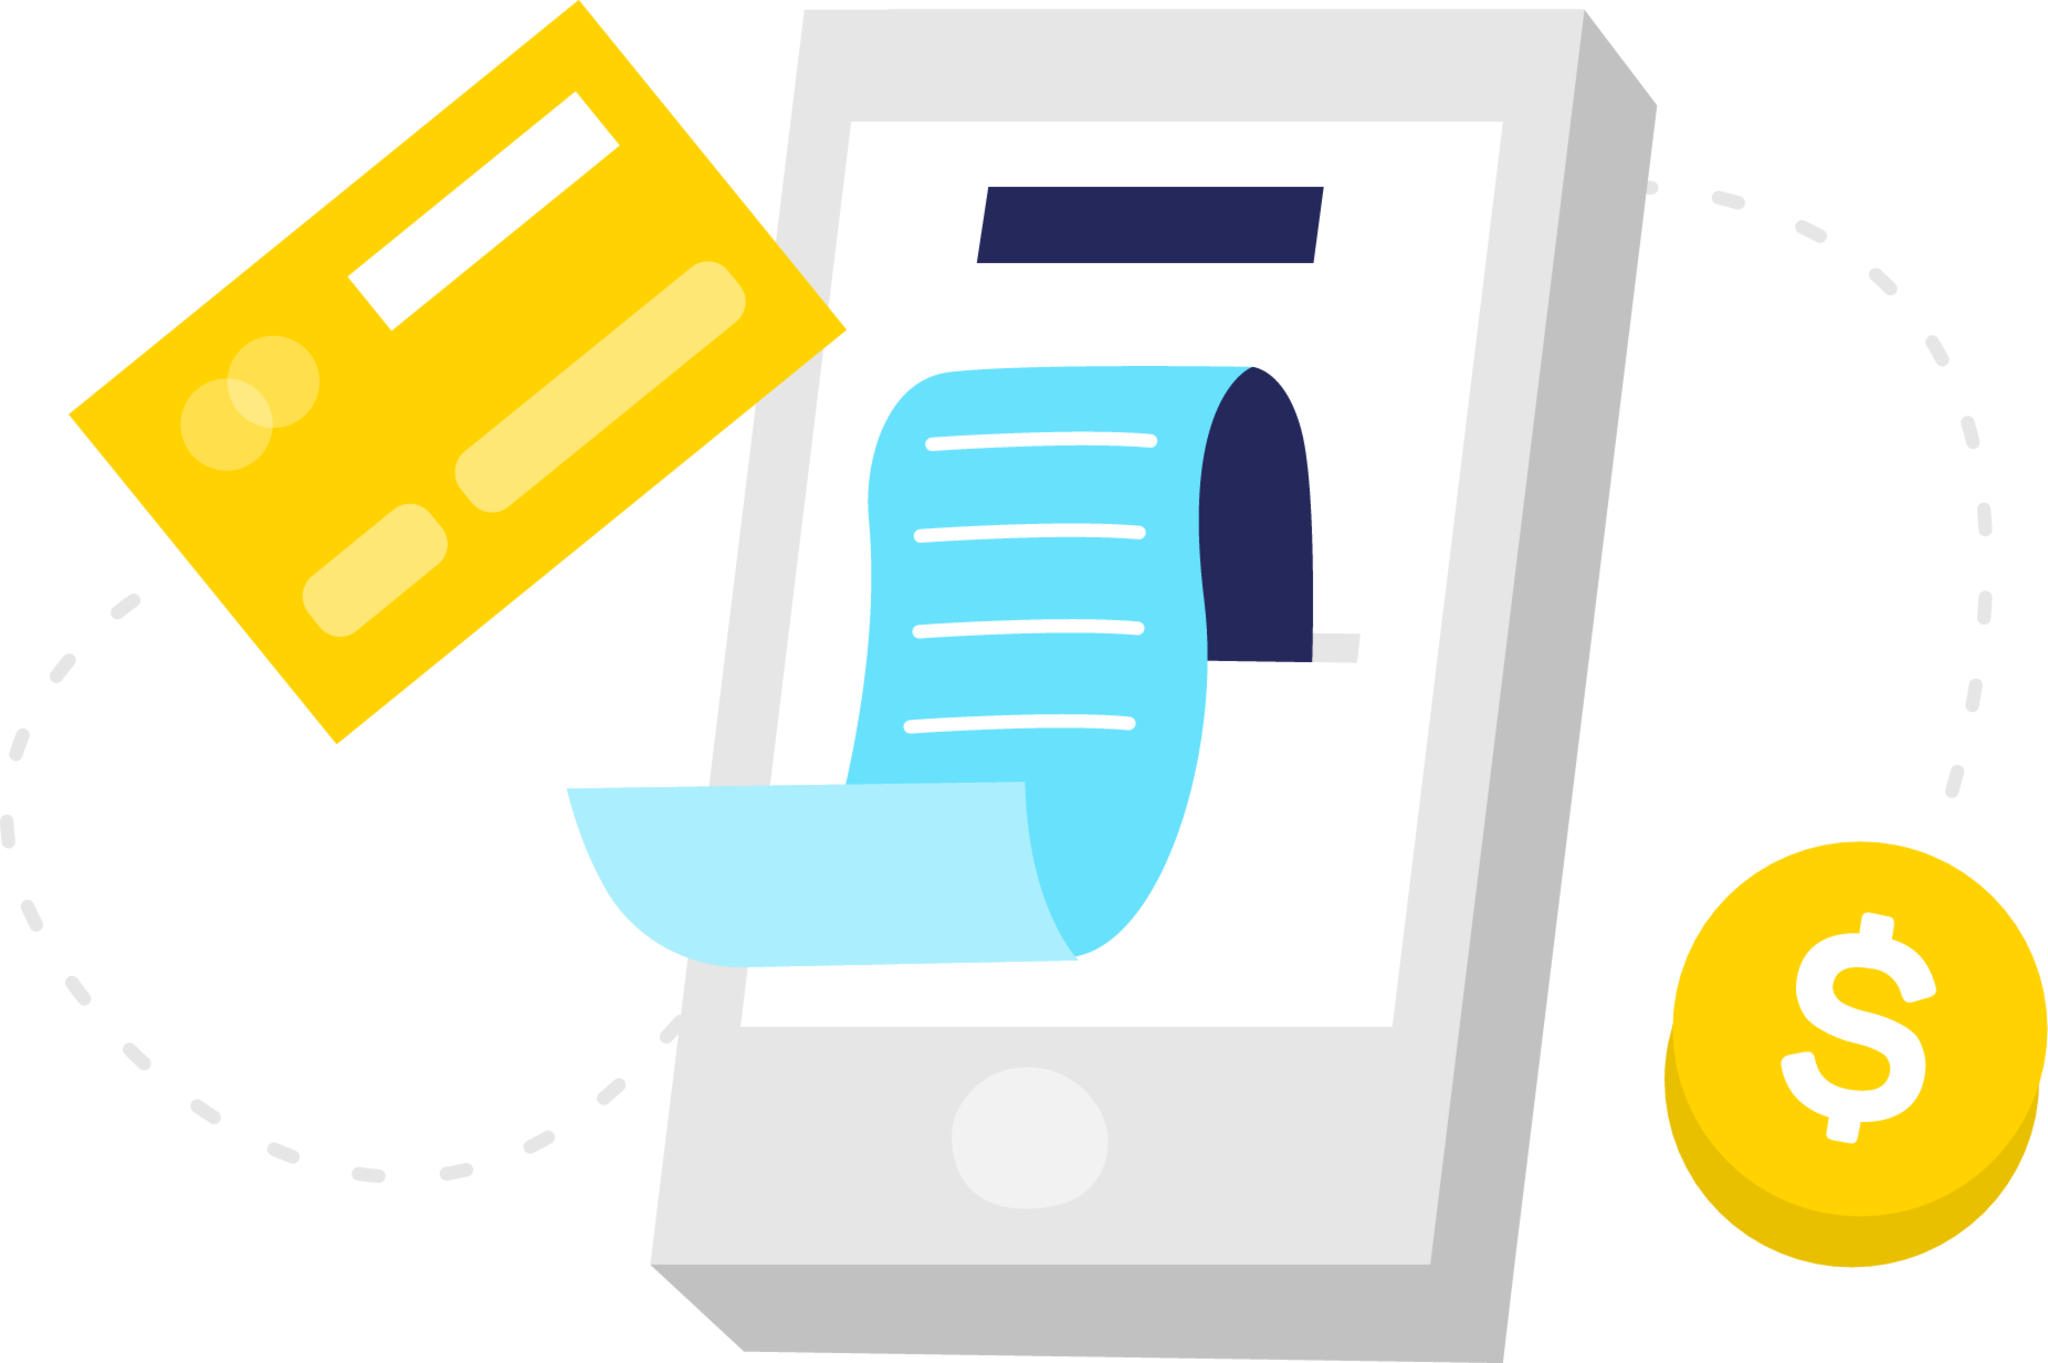 Online payment illustration